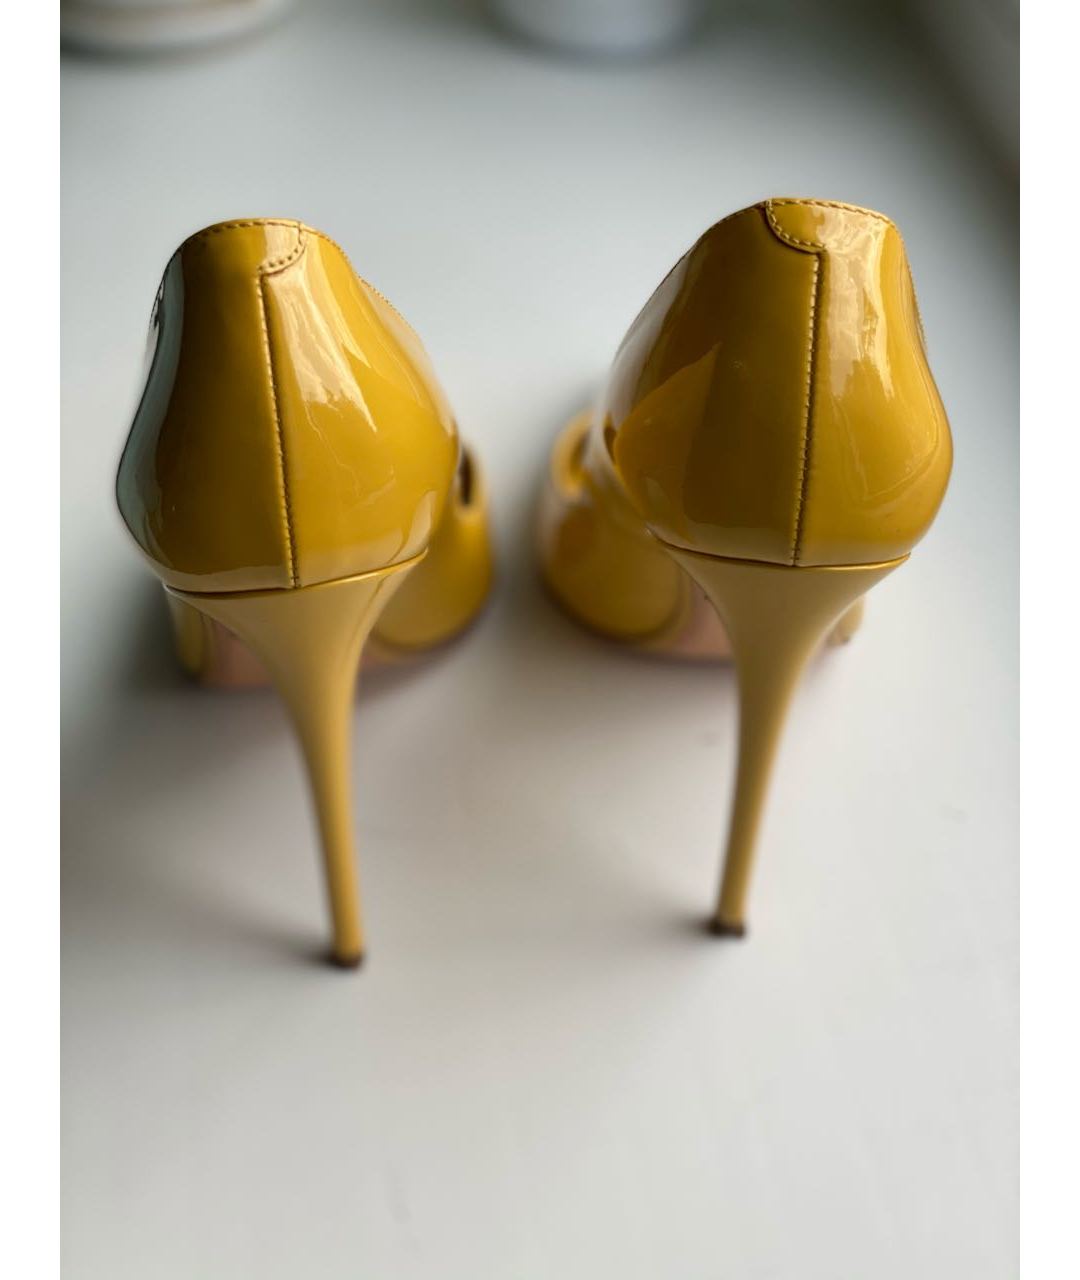 DOLCE&GABBANA Желтые кожаные туфли, фото 3